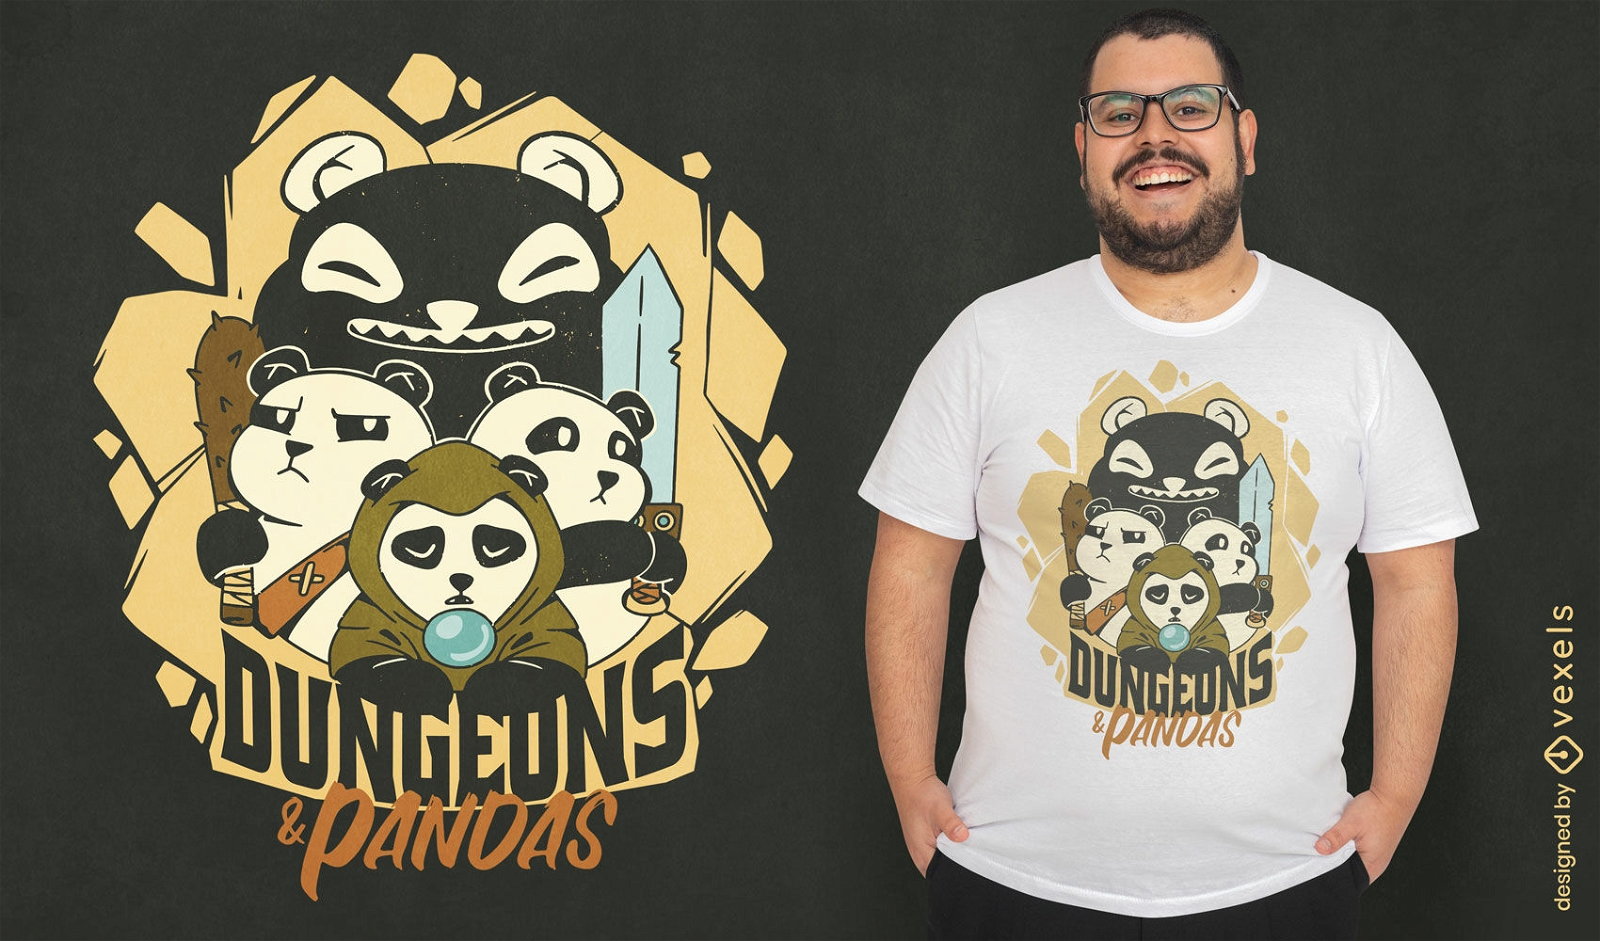 Dungeons and pandas t-shirt design